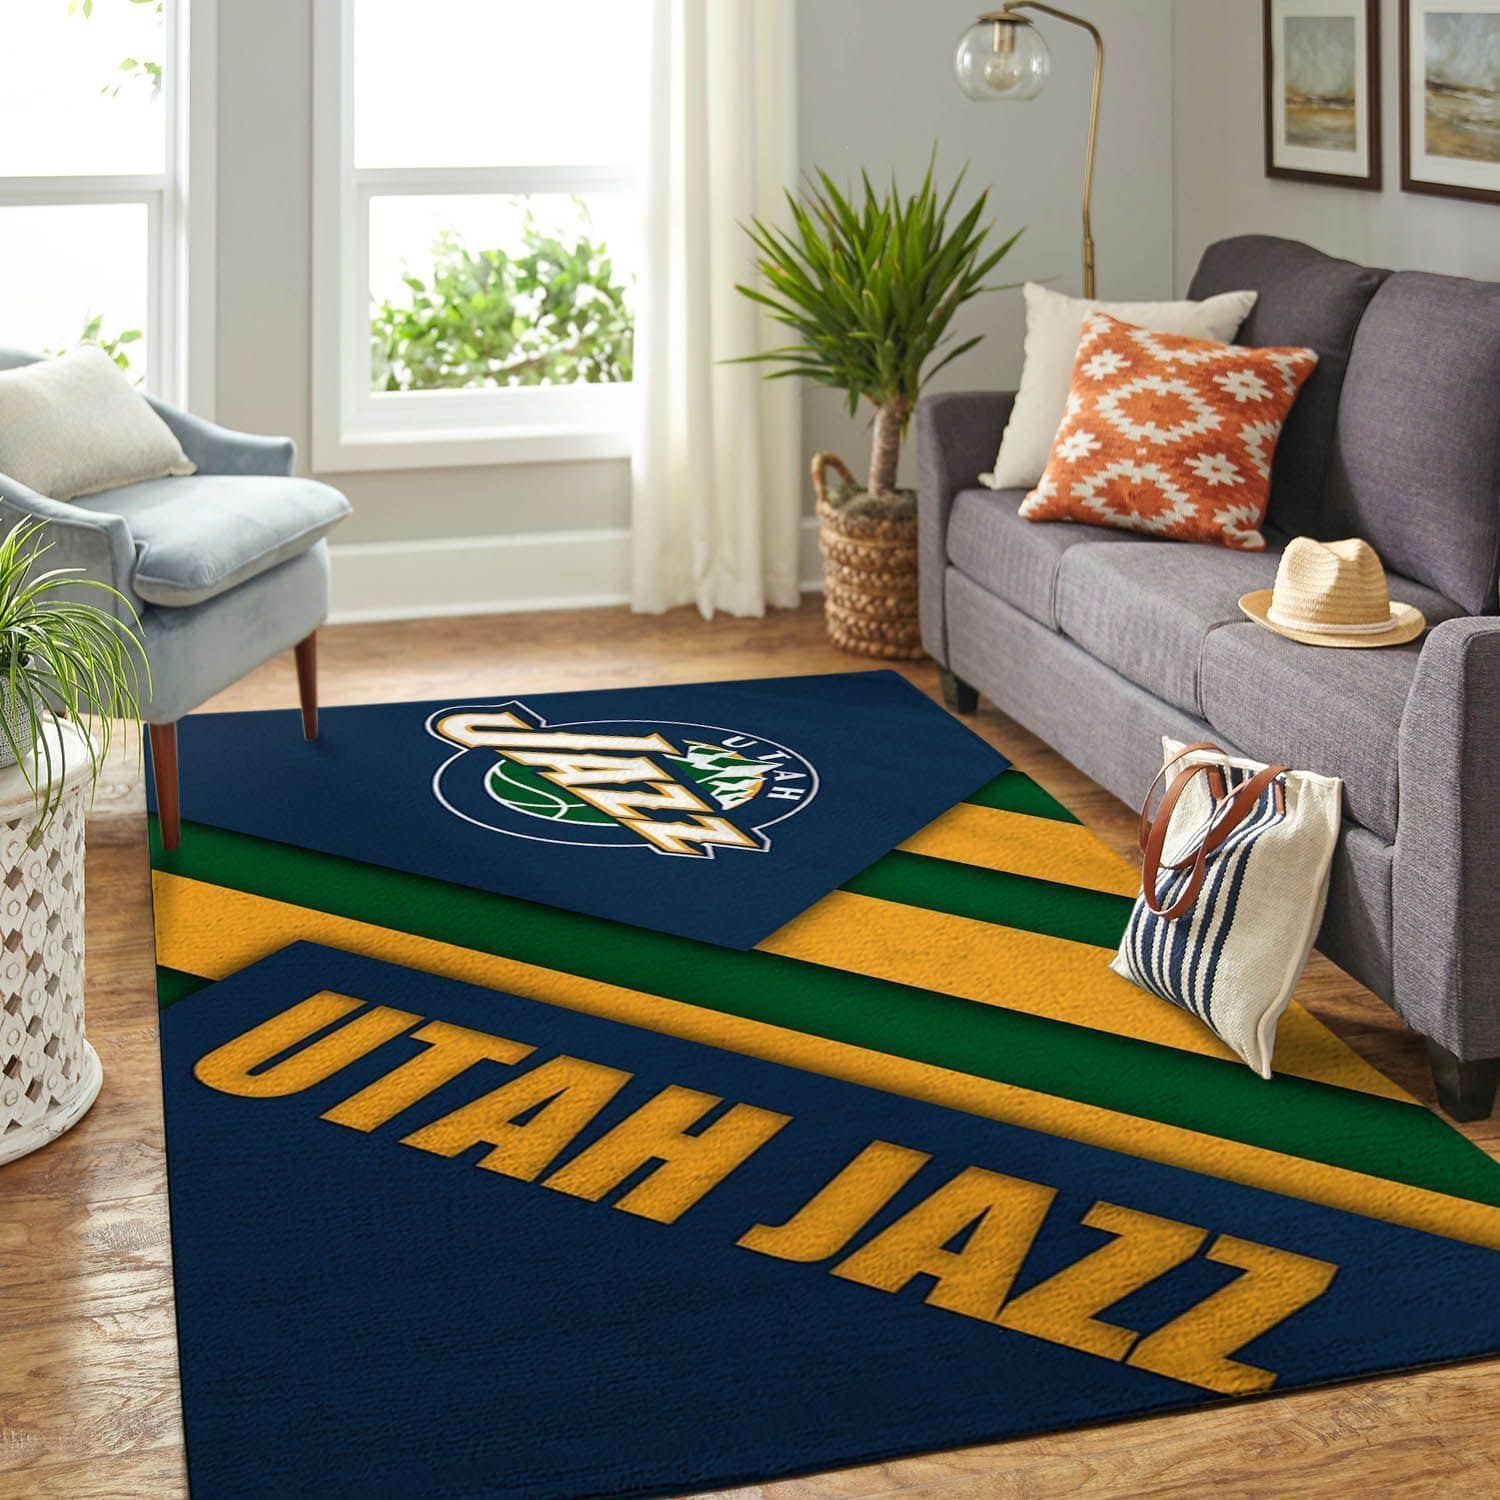 Amazon Utah Jazz Living Room Area No5303 Rug